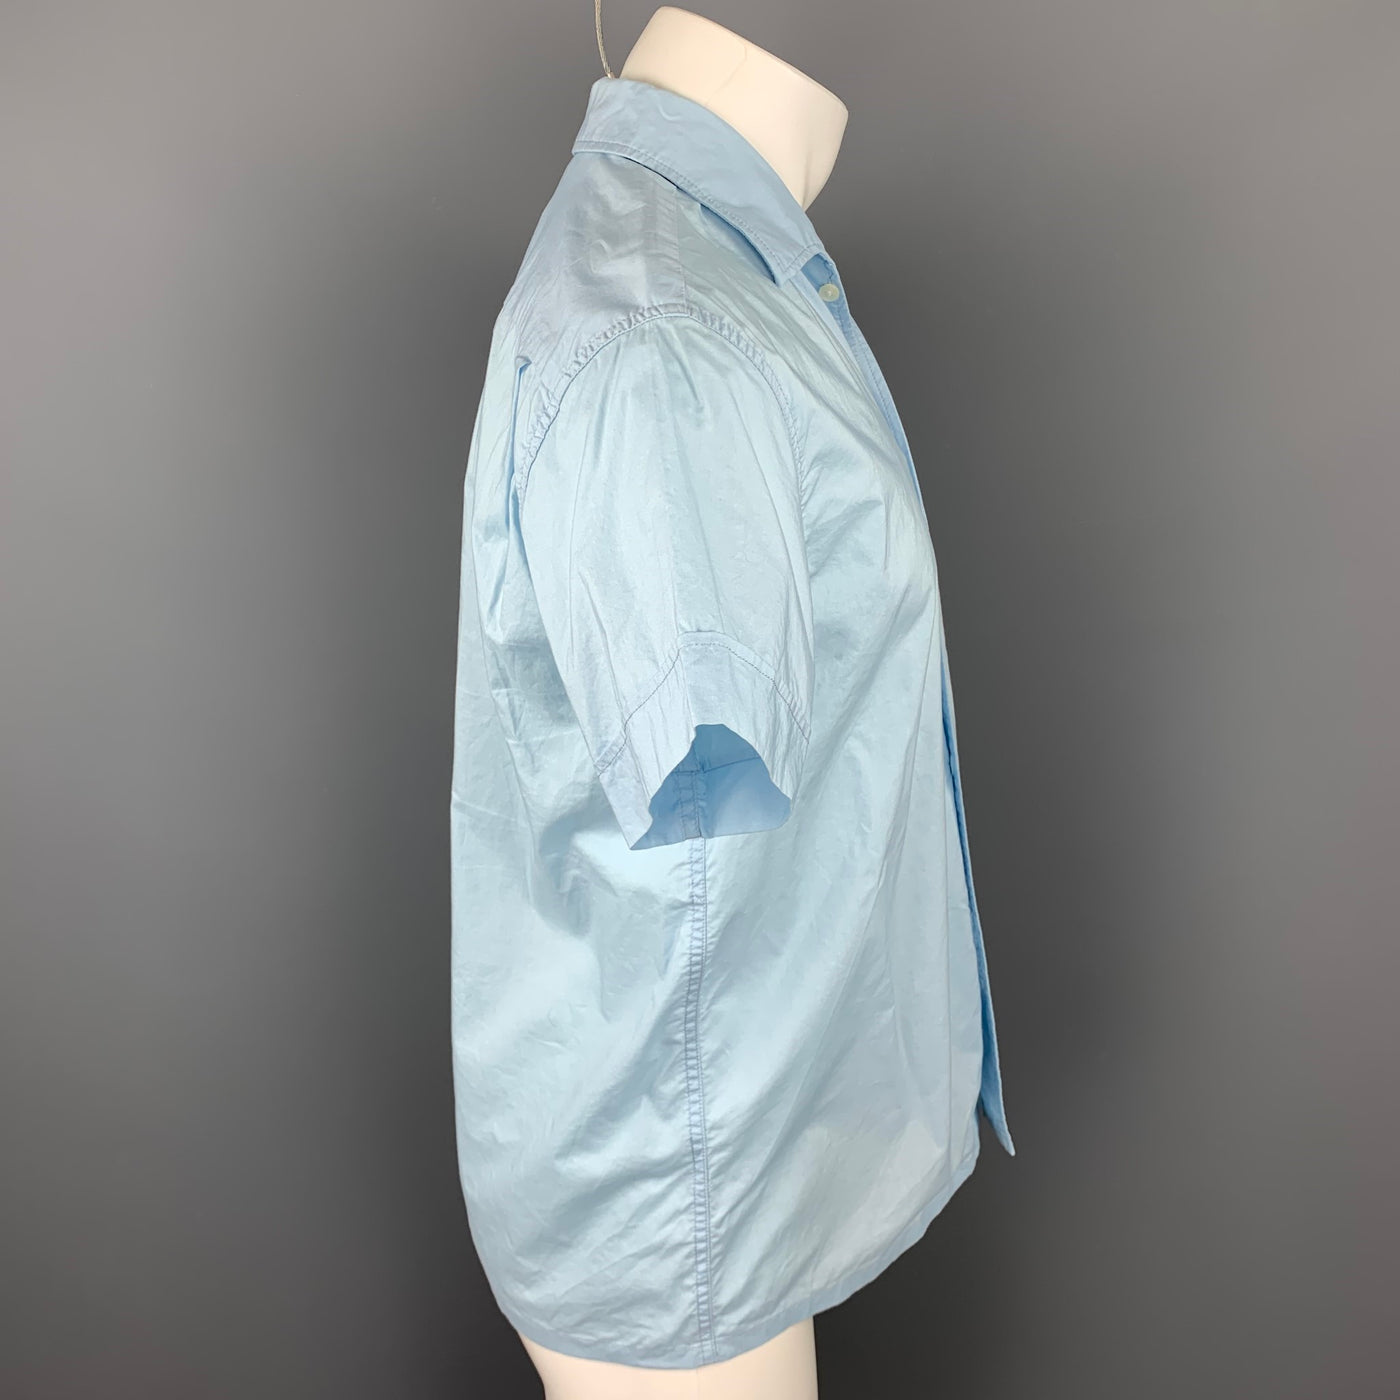 RWCHE Size M Light Blue Cotton Button Up Short Sleeve Shirt